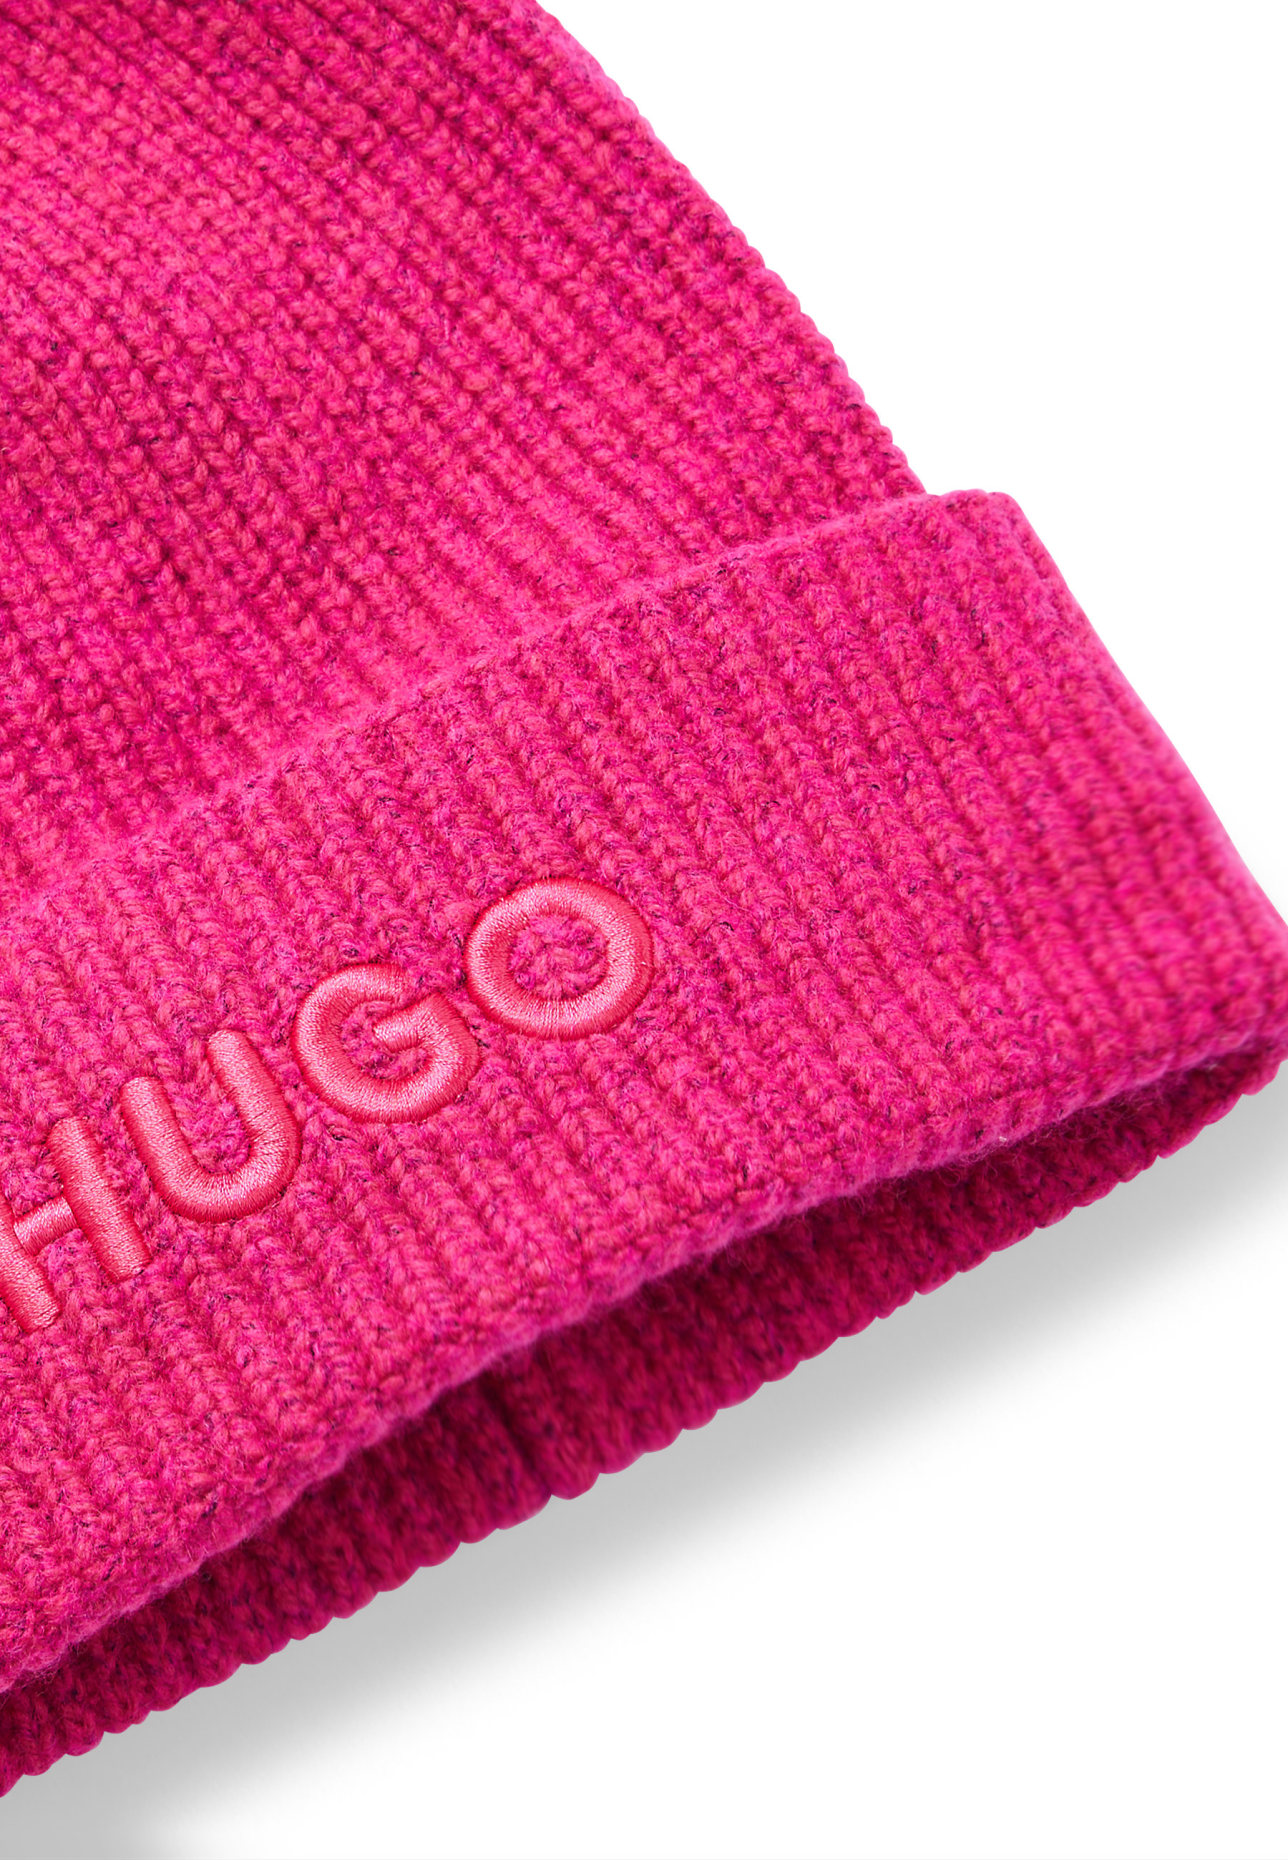 SOCIAL_HAT in pink HUGO Strickmütze